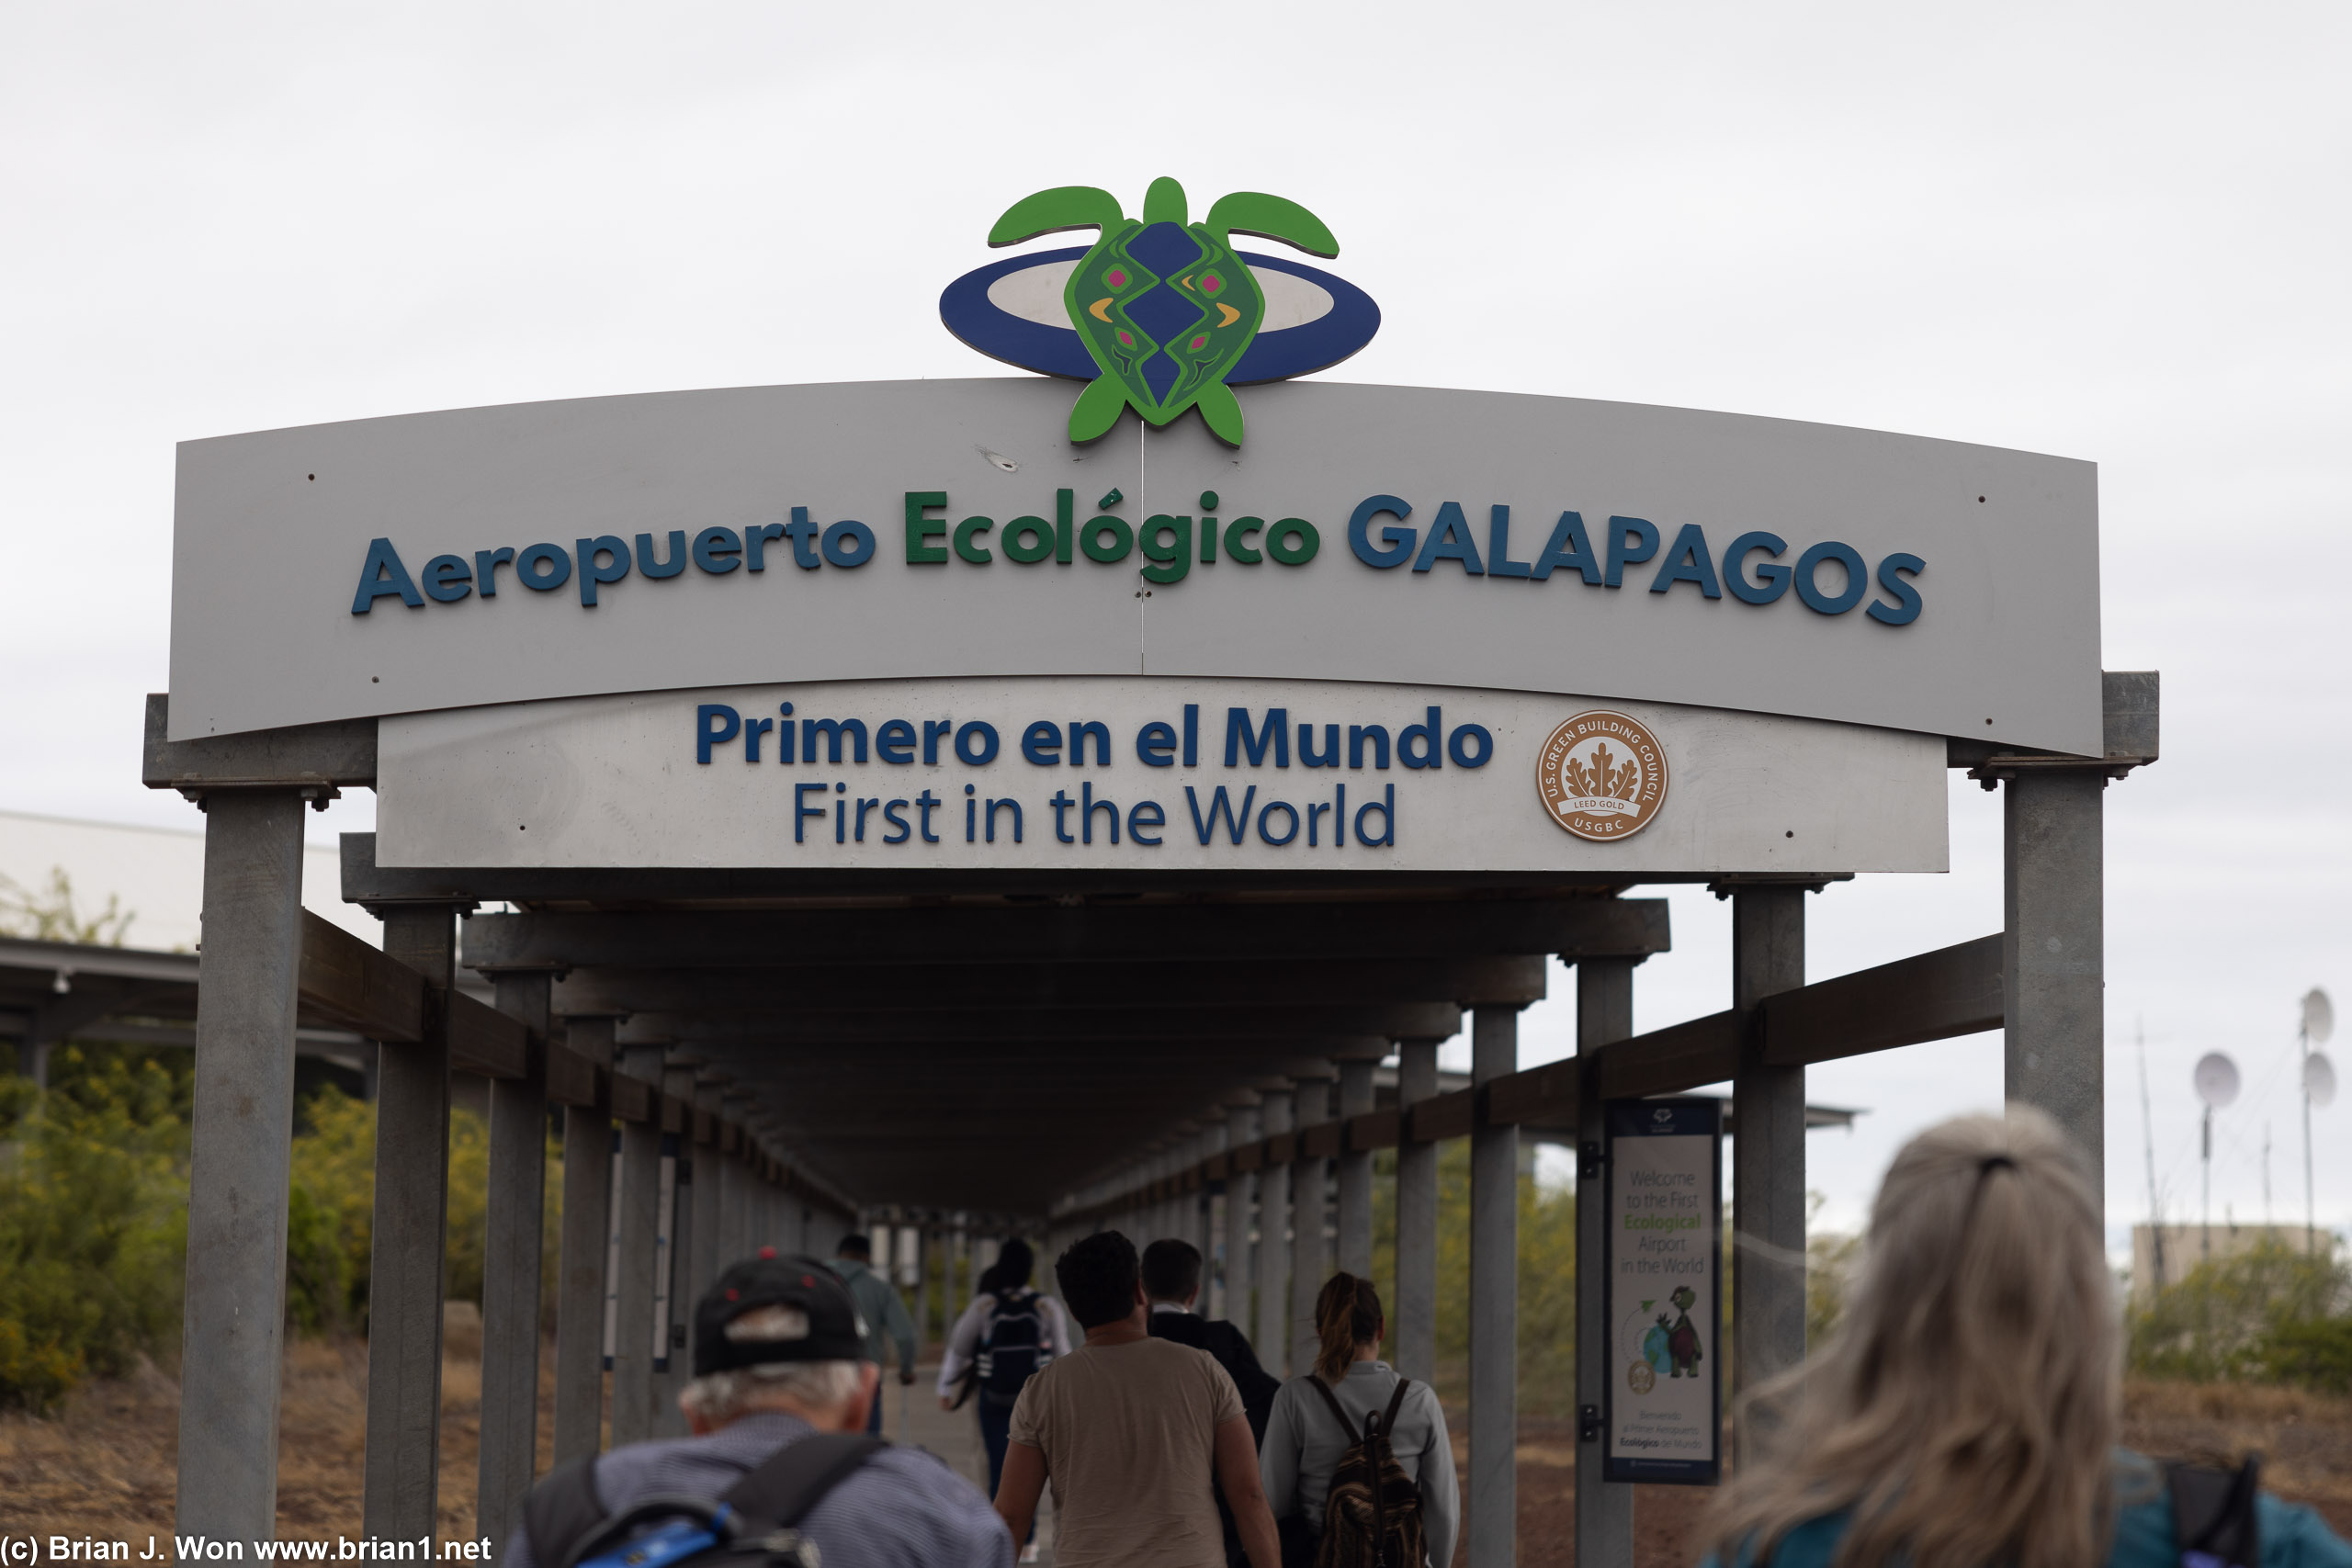 Aeropuerto Ecologico Galapagos (GPS).